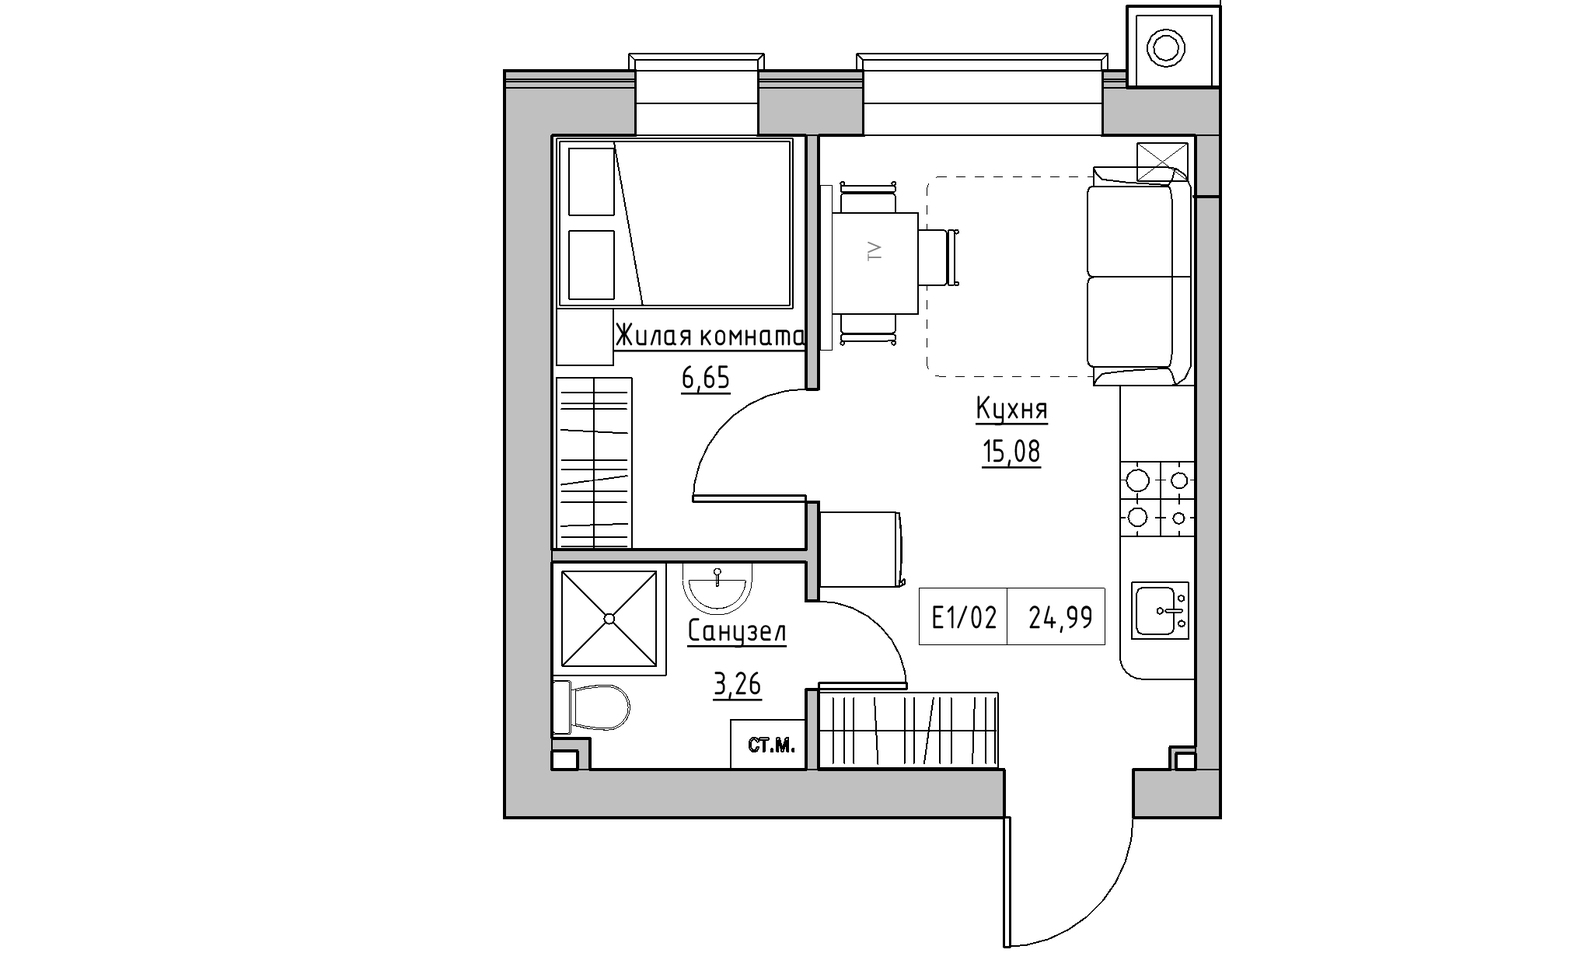 Planning 1-rm flats area 24.99m2, KS-014-03/0004.